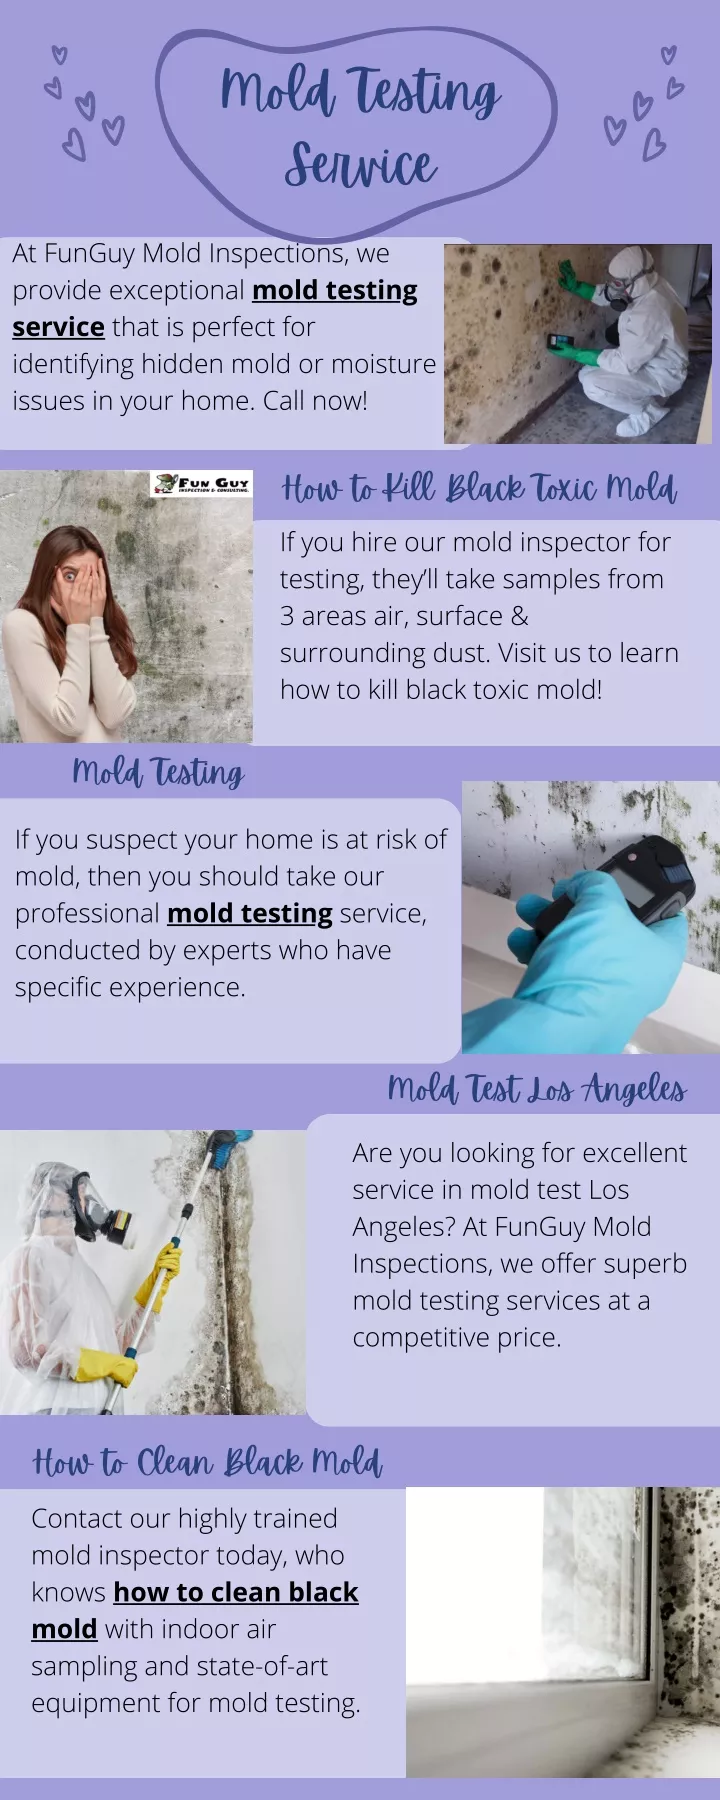 mold testing service